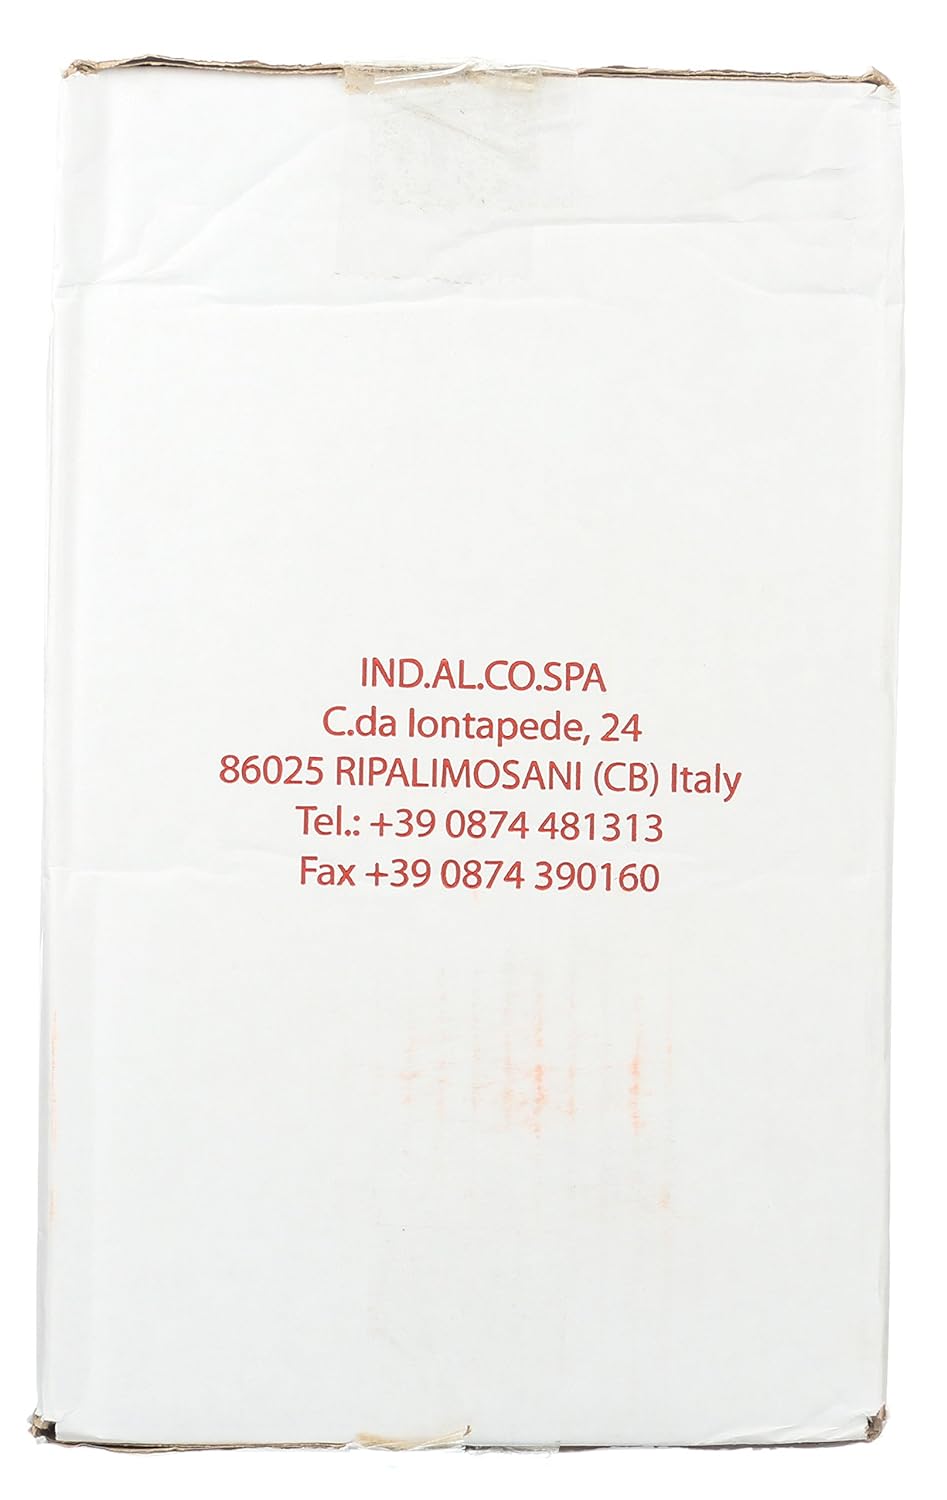 Colavita Pasta - Cavatappi, 1 Pound - Pack of 20 : Italian Pasta : Grocery & Gourmet Food